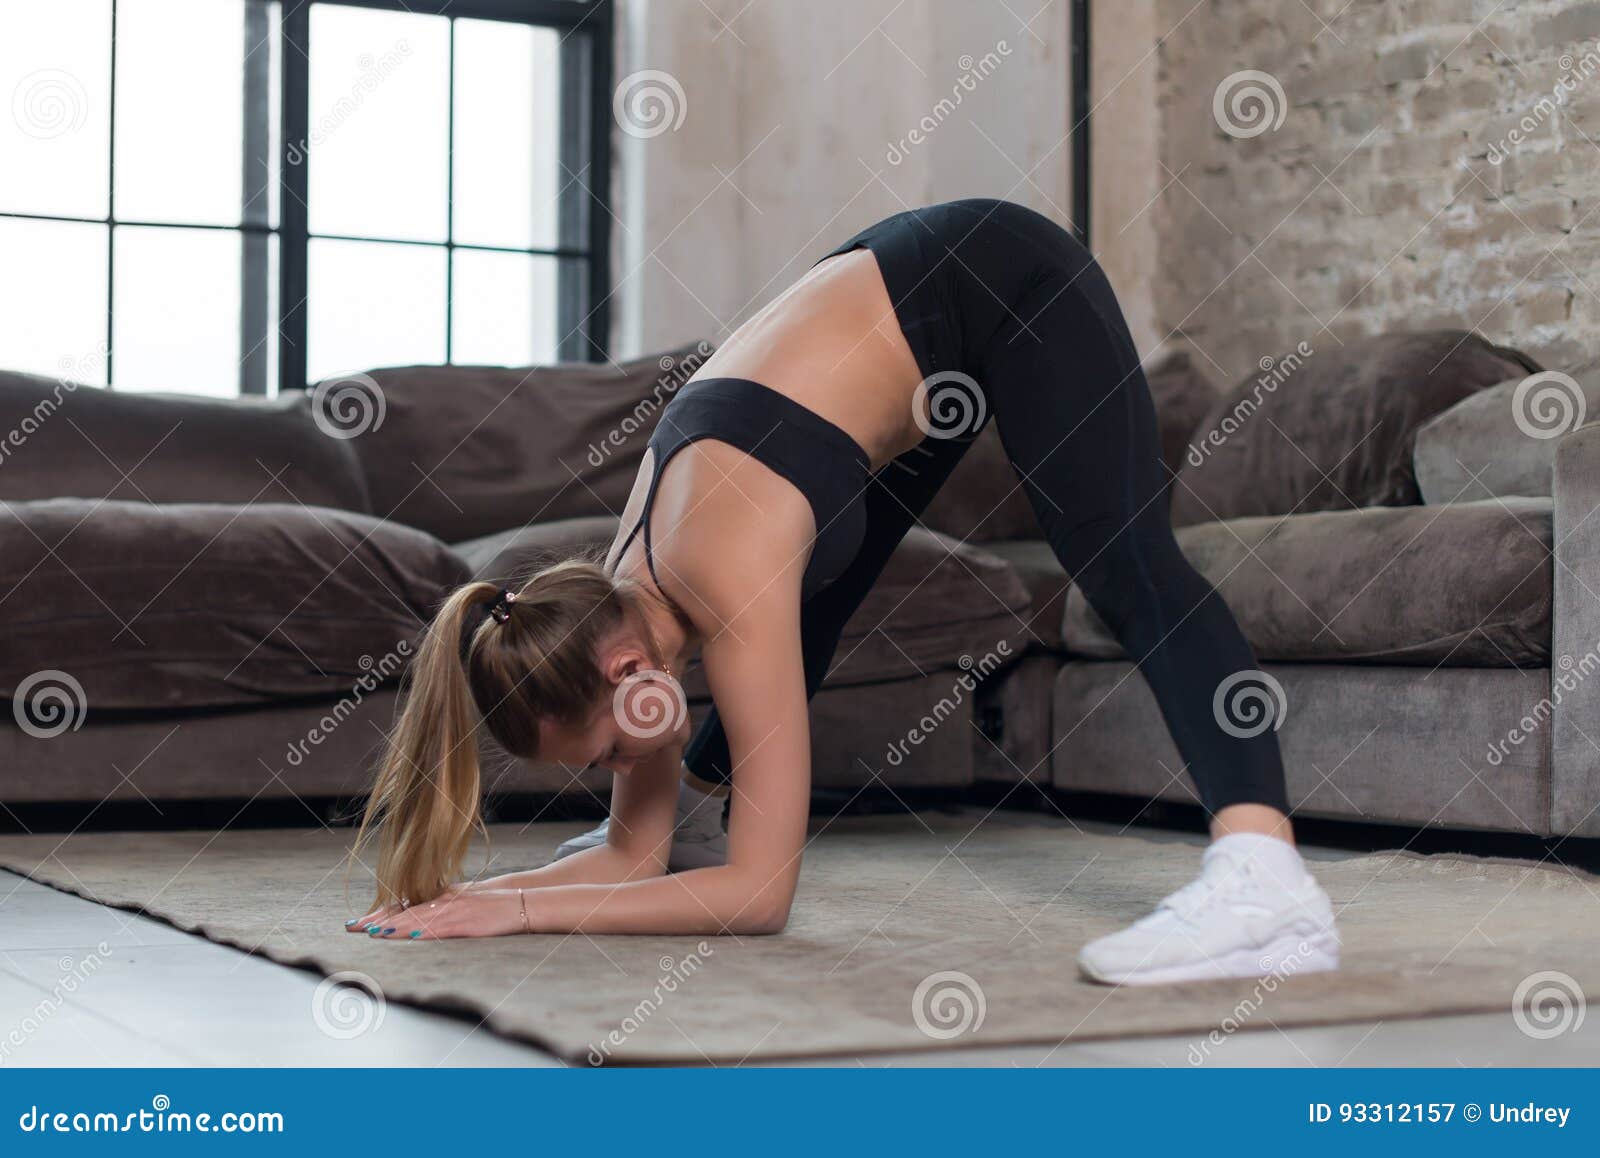 fit young sportswoman doing standing straddle forward bend or prasarita padottanasana pose. female athlete practicing